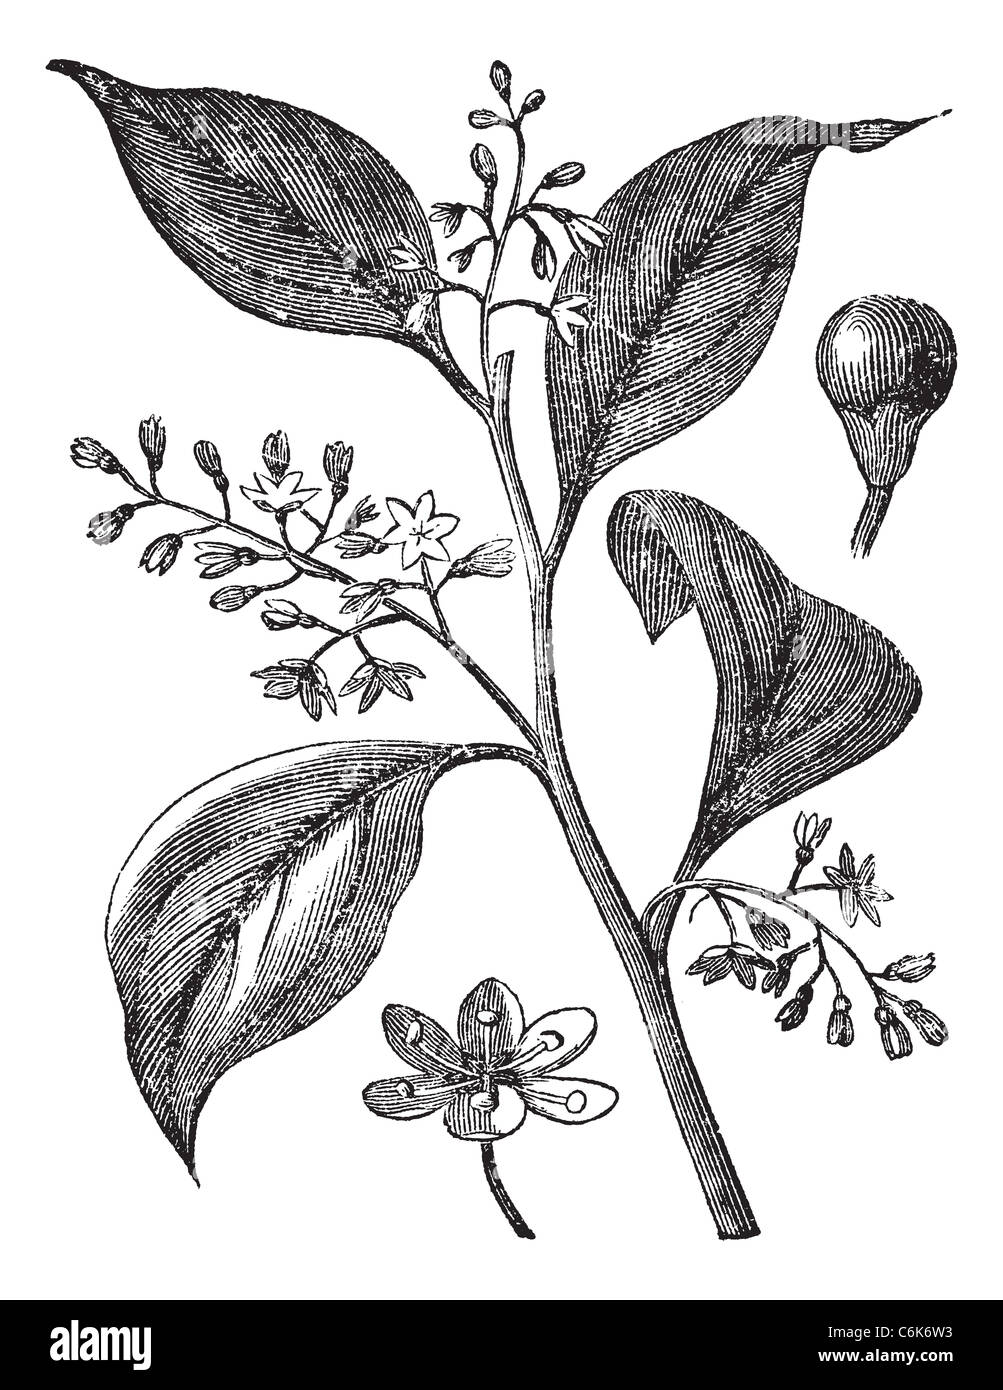 Camphrier officinal or Medicinal plant vintage engraving. Old engraved illustration of camphor tree leaves and flowers. Stock Photo